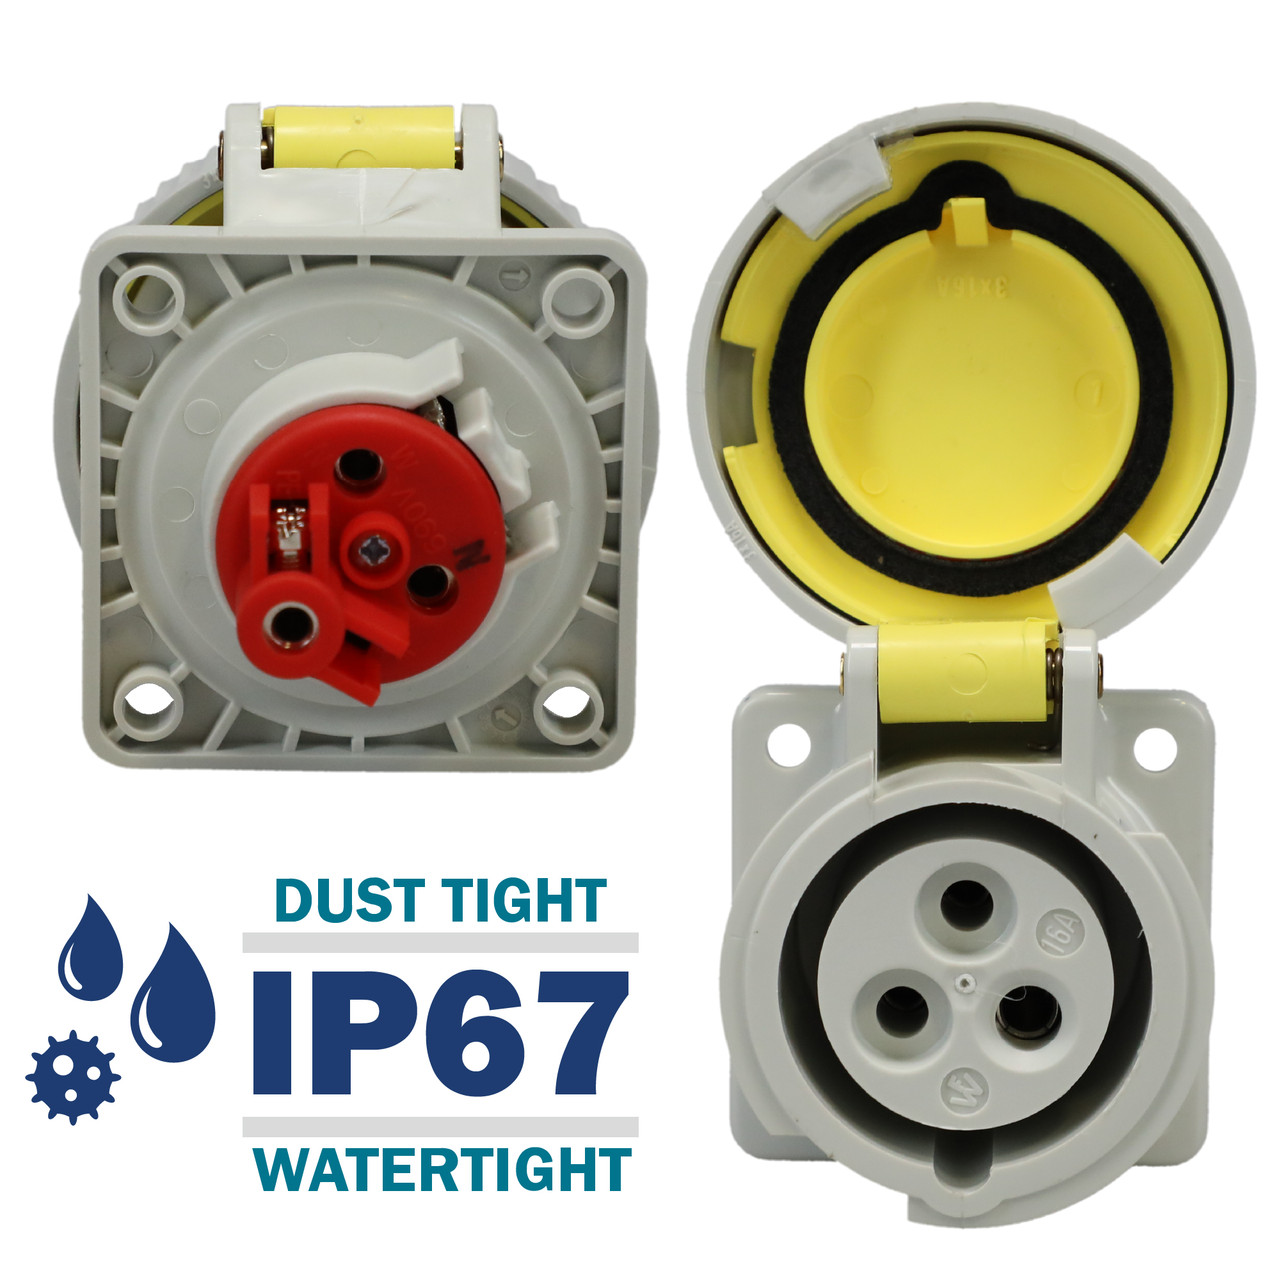 419316 Receptacle carries an environmental rating of IP67 Watertight